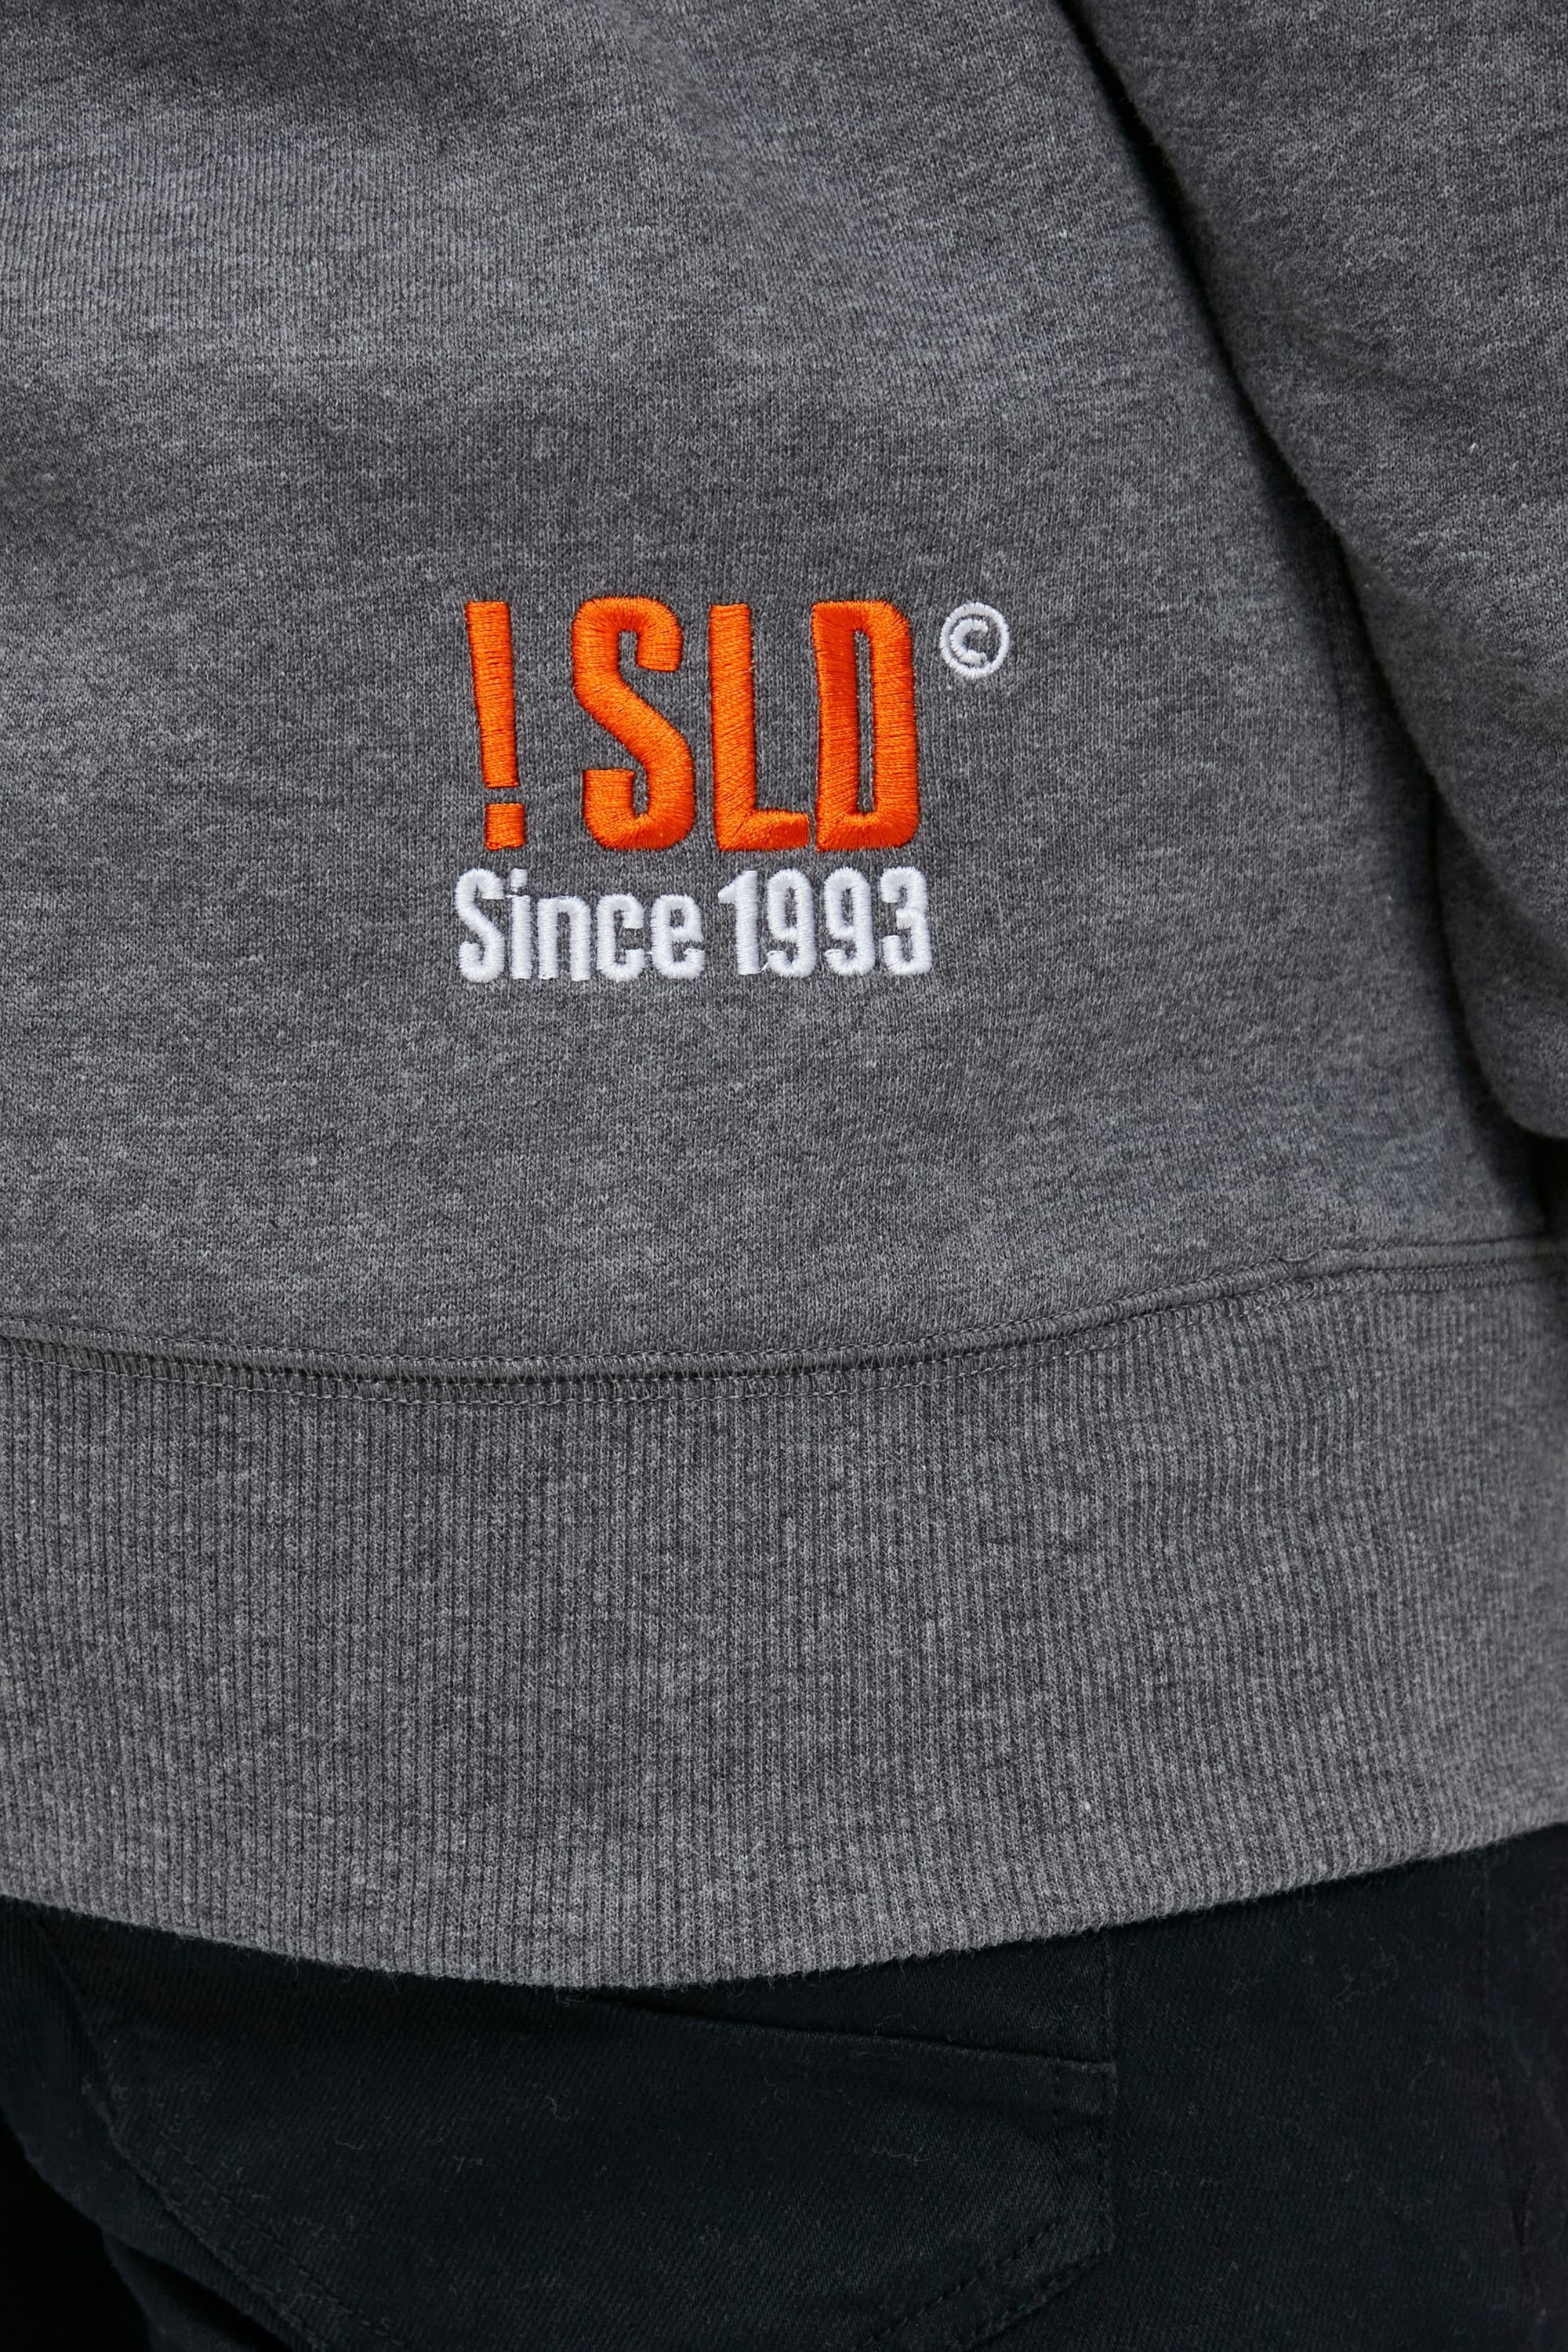 Solid Hoodie SDBennHood Grey Details mit Melange Kapuzensweatshirt (8236) kontrastfarbenenen